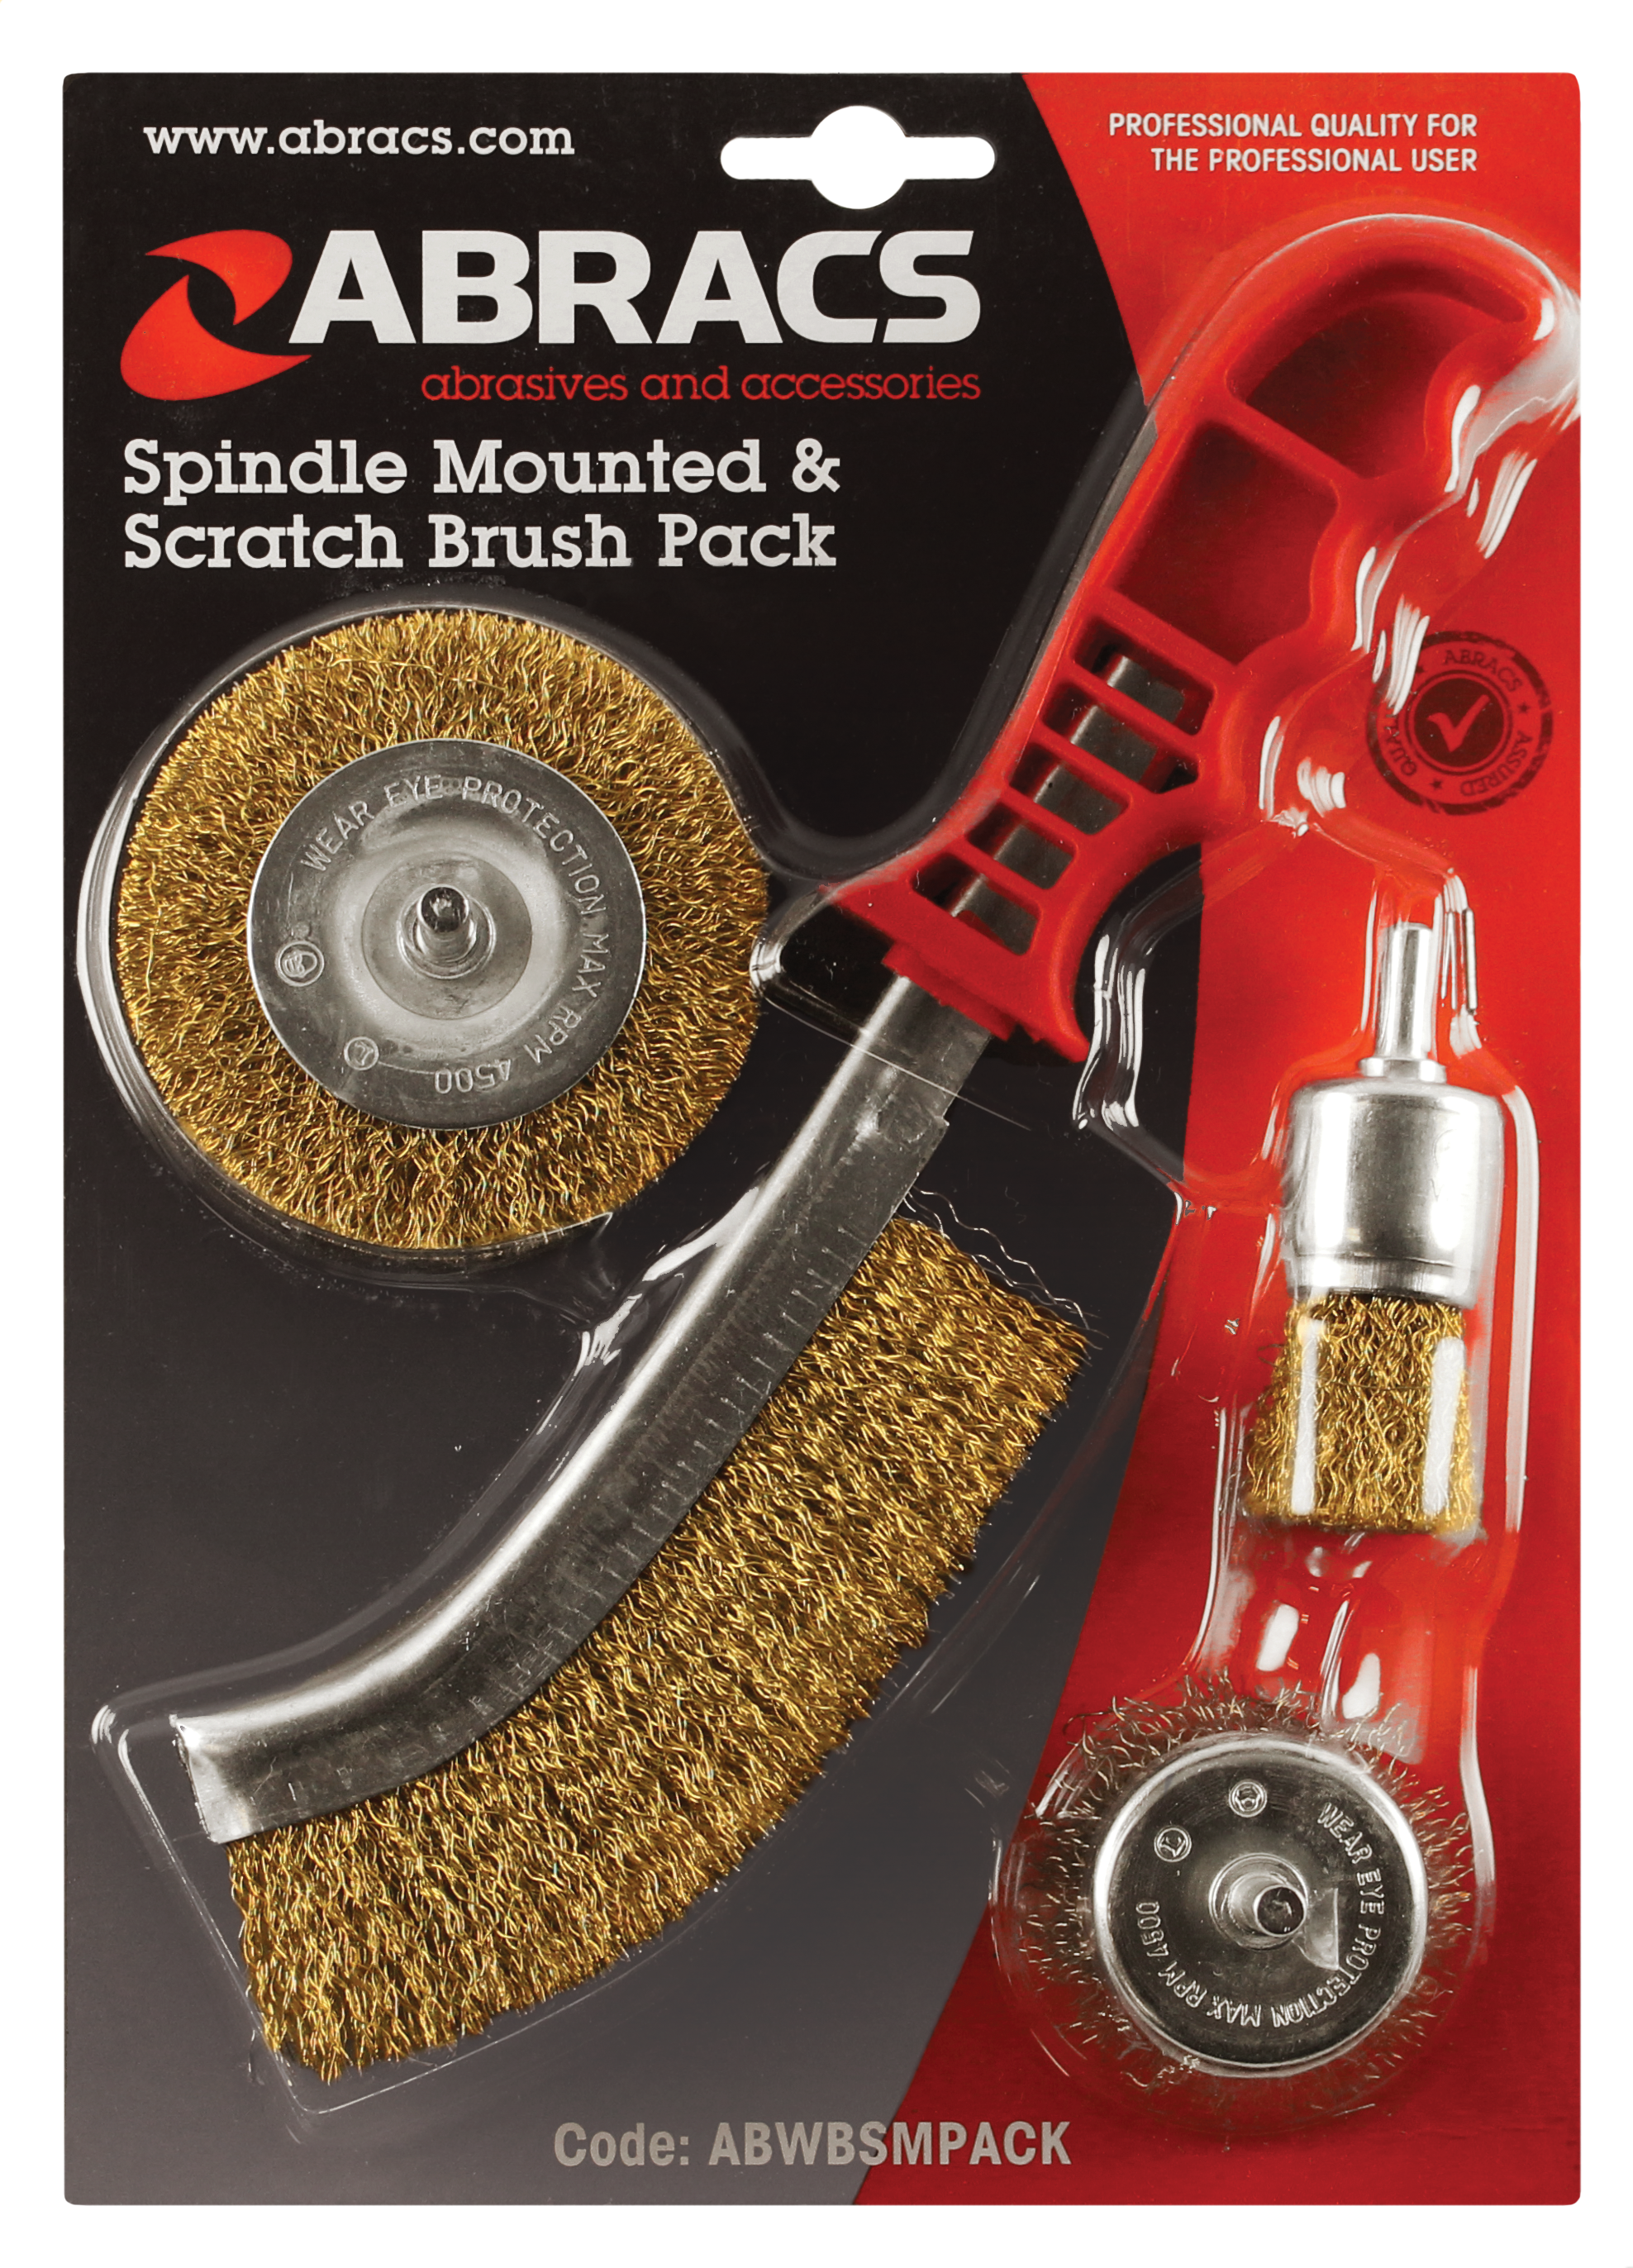 Abracs Spindle Mounted & Scratch Brush Pack ABWBSMPACK